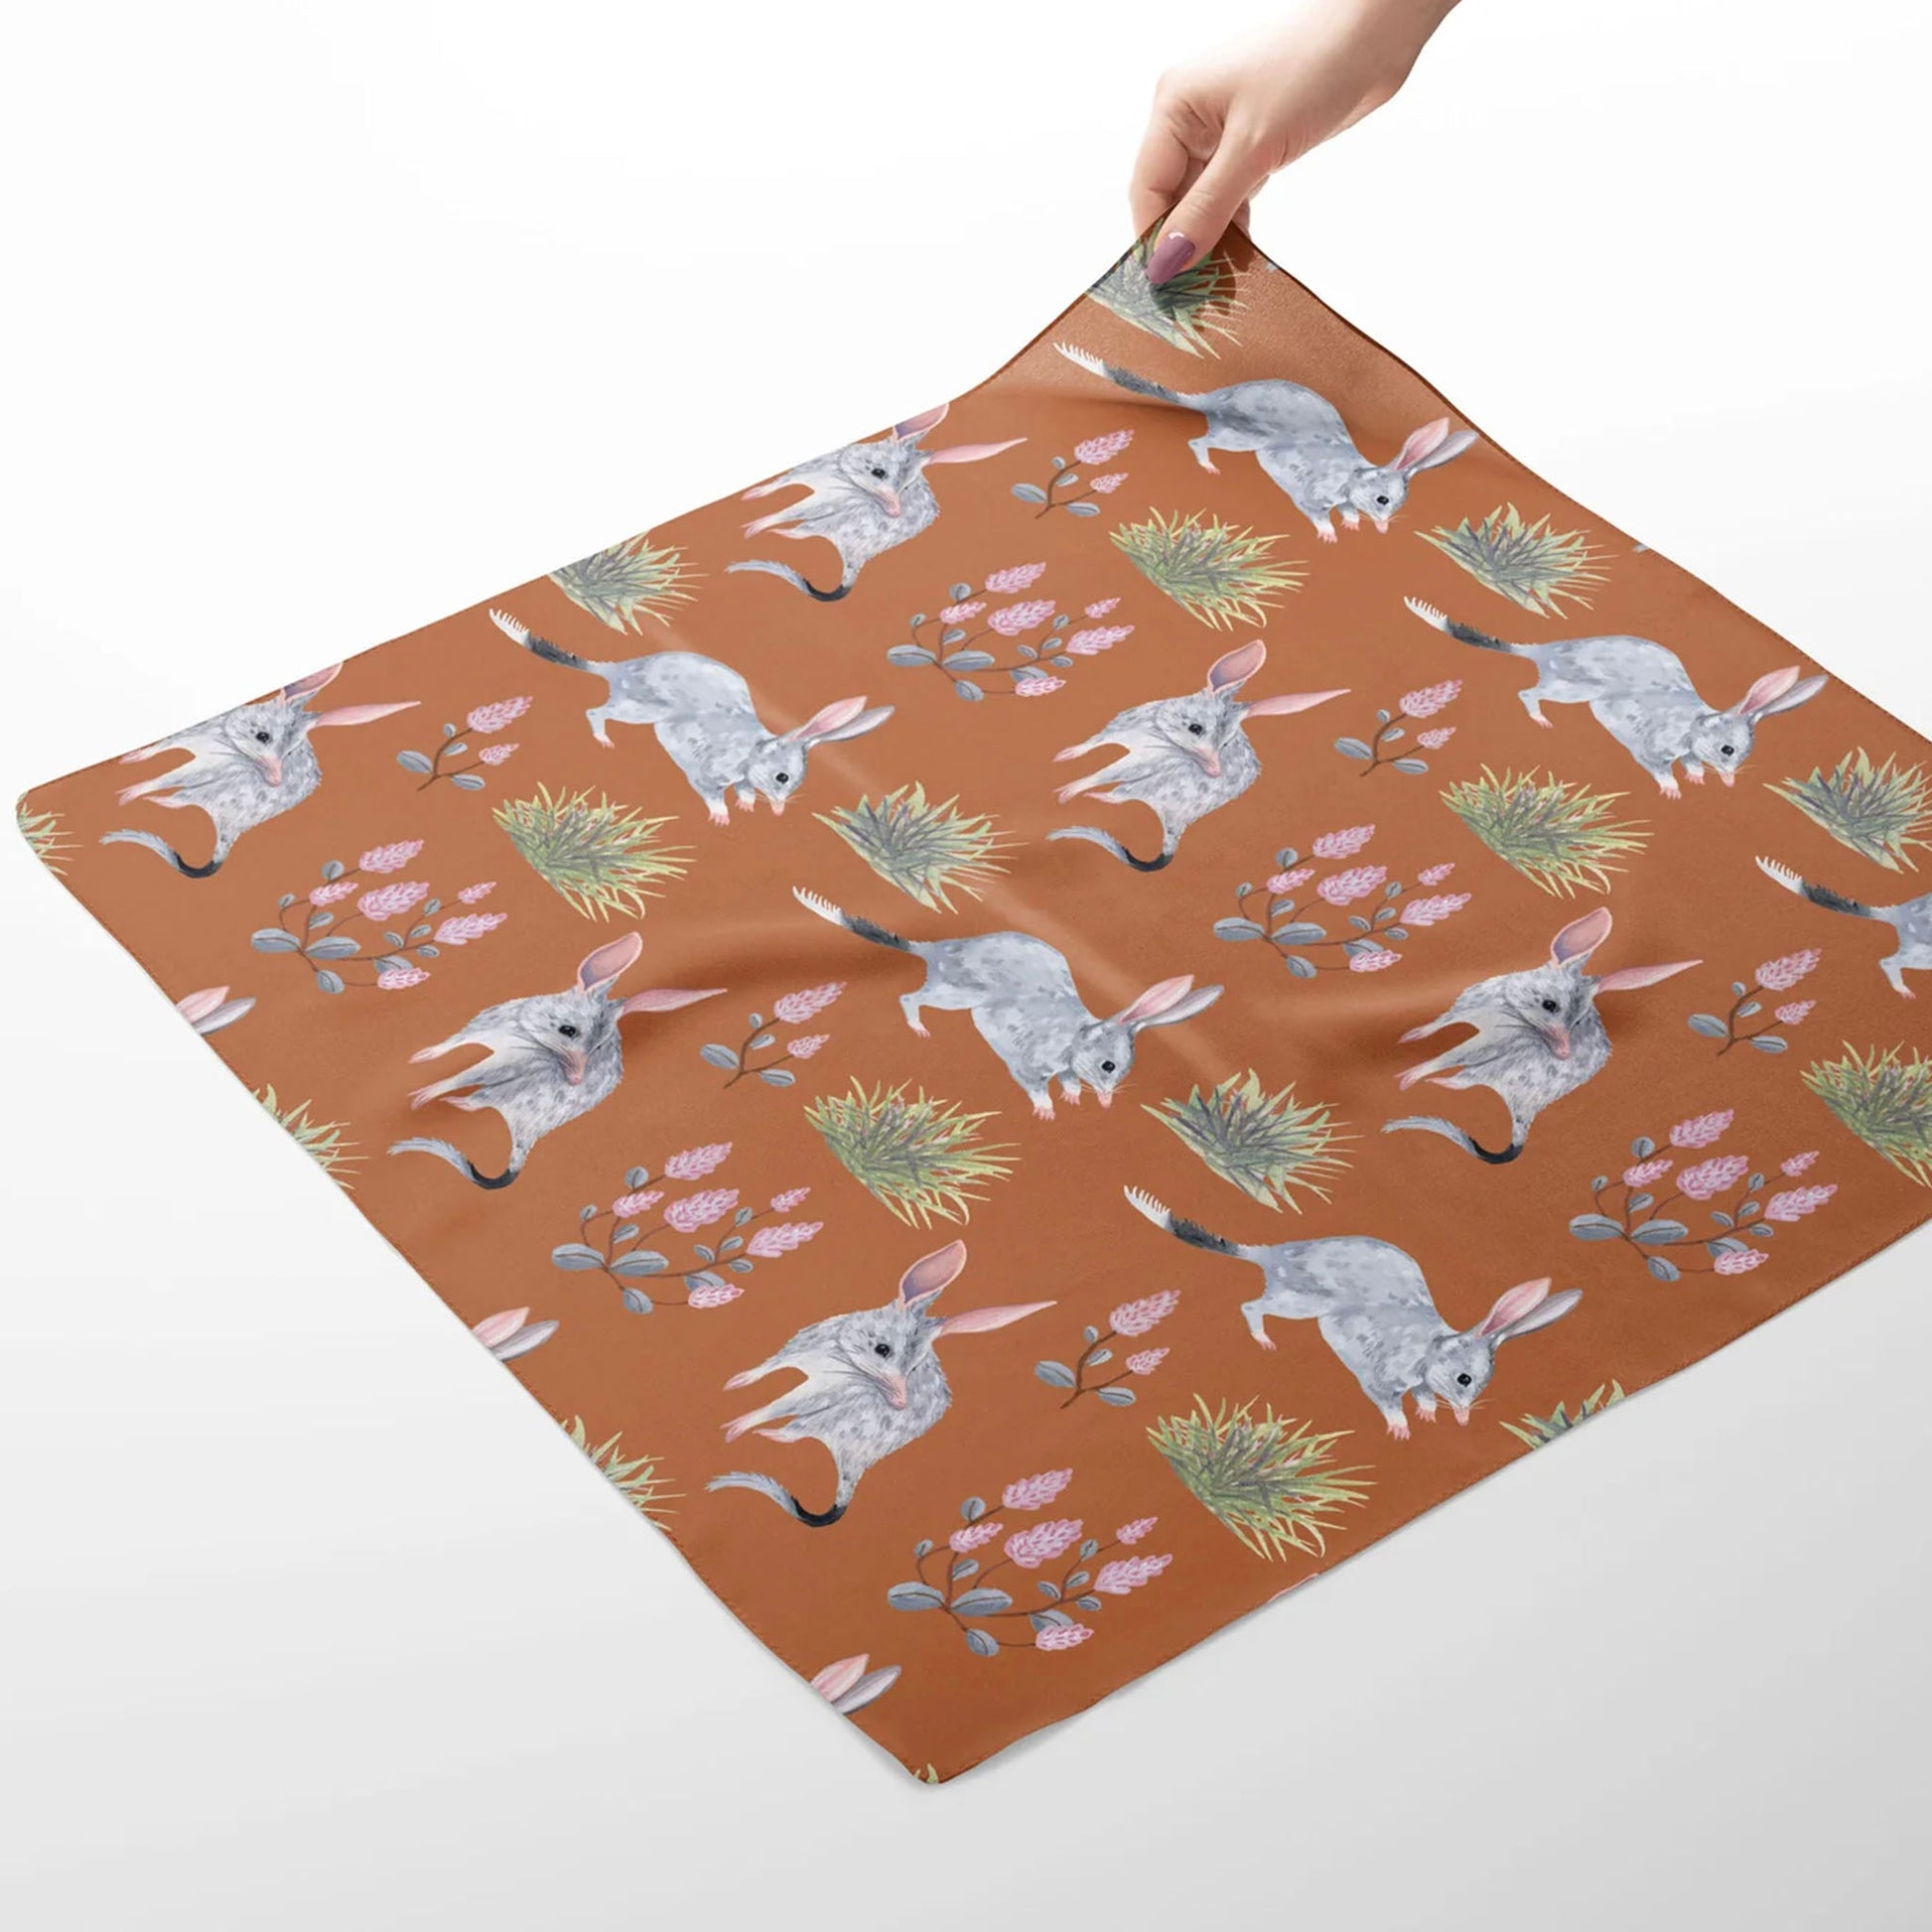 Australian Bilby and wildflower 65 x 65cm square silk cotton scarf.